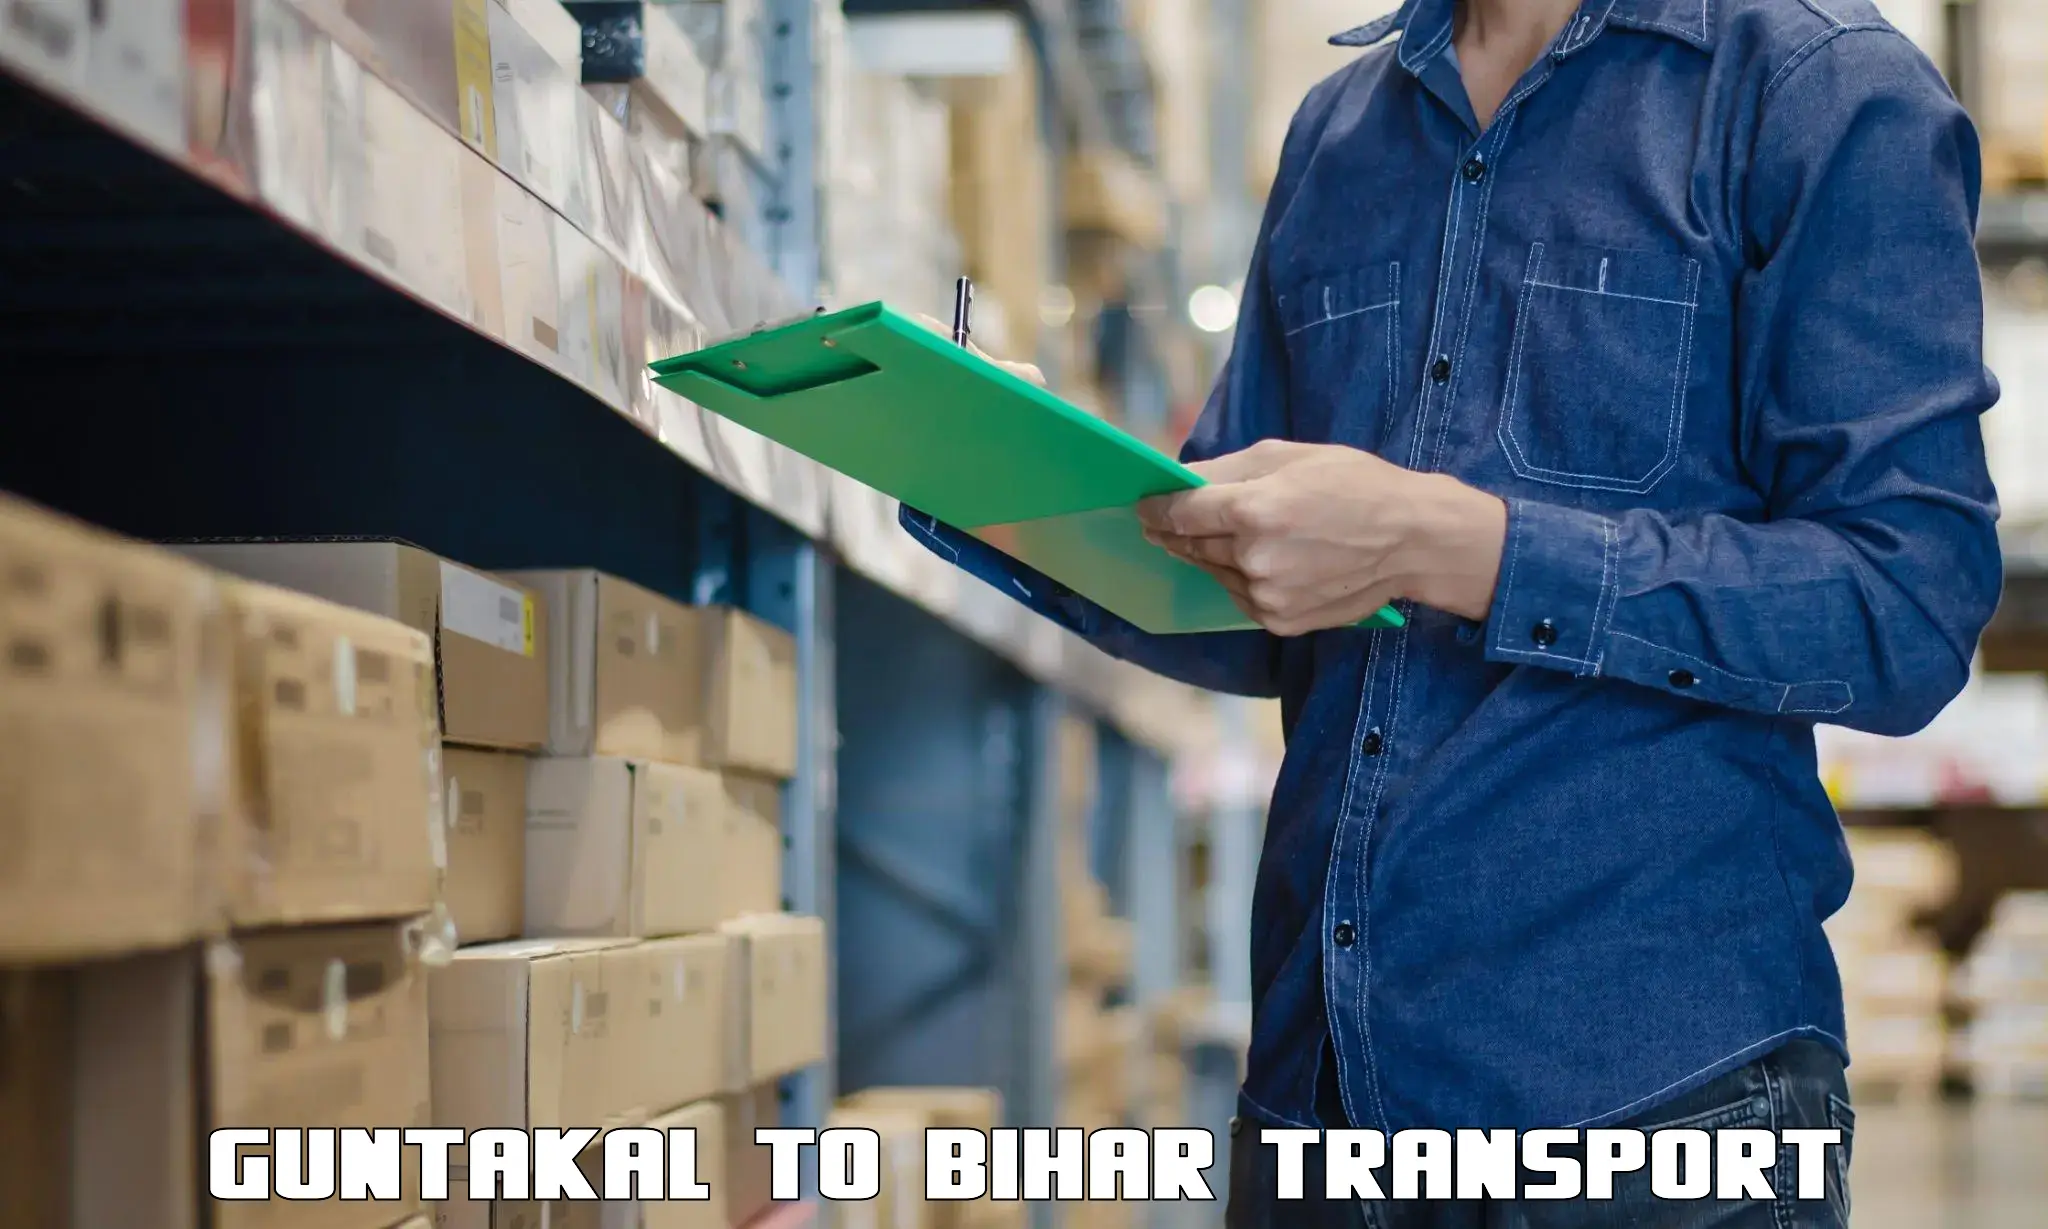 Transport shared services Guntakal to Bihar